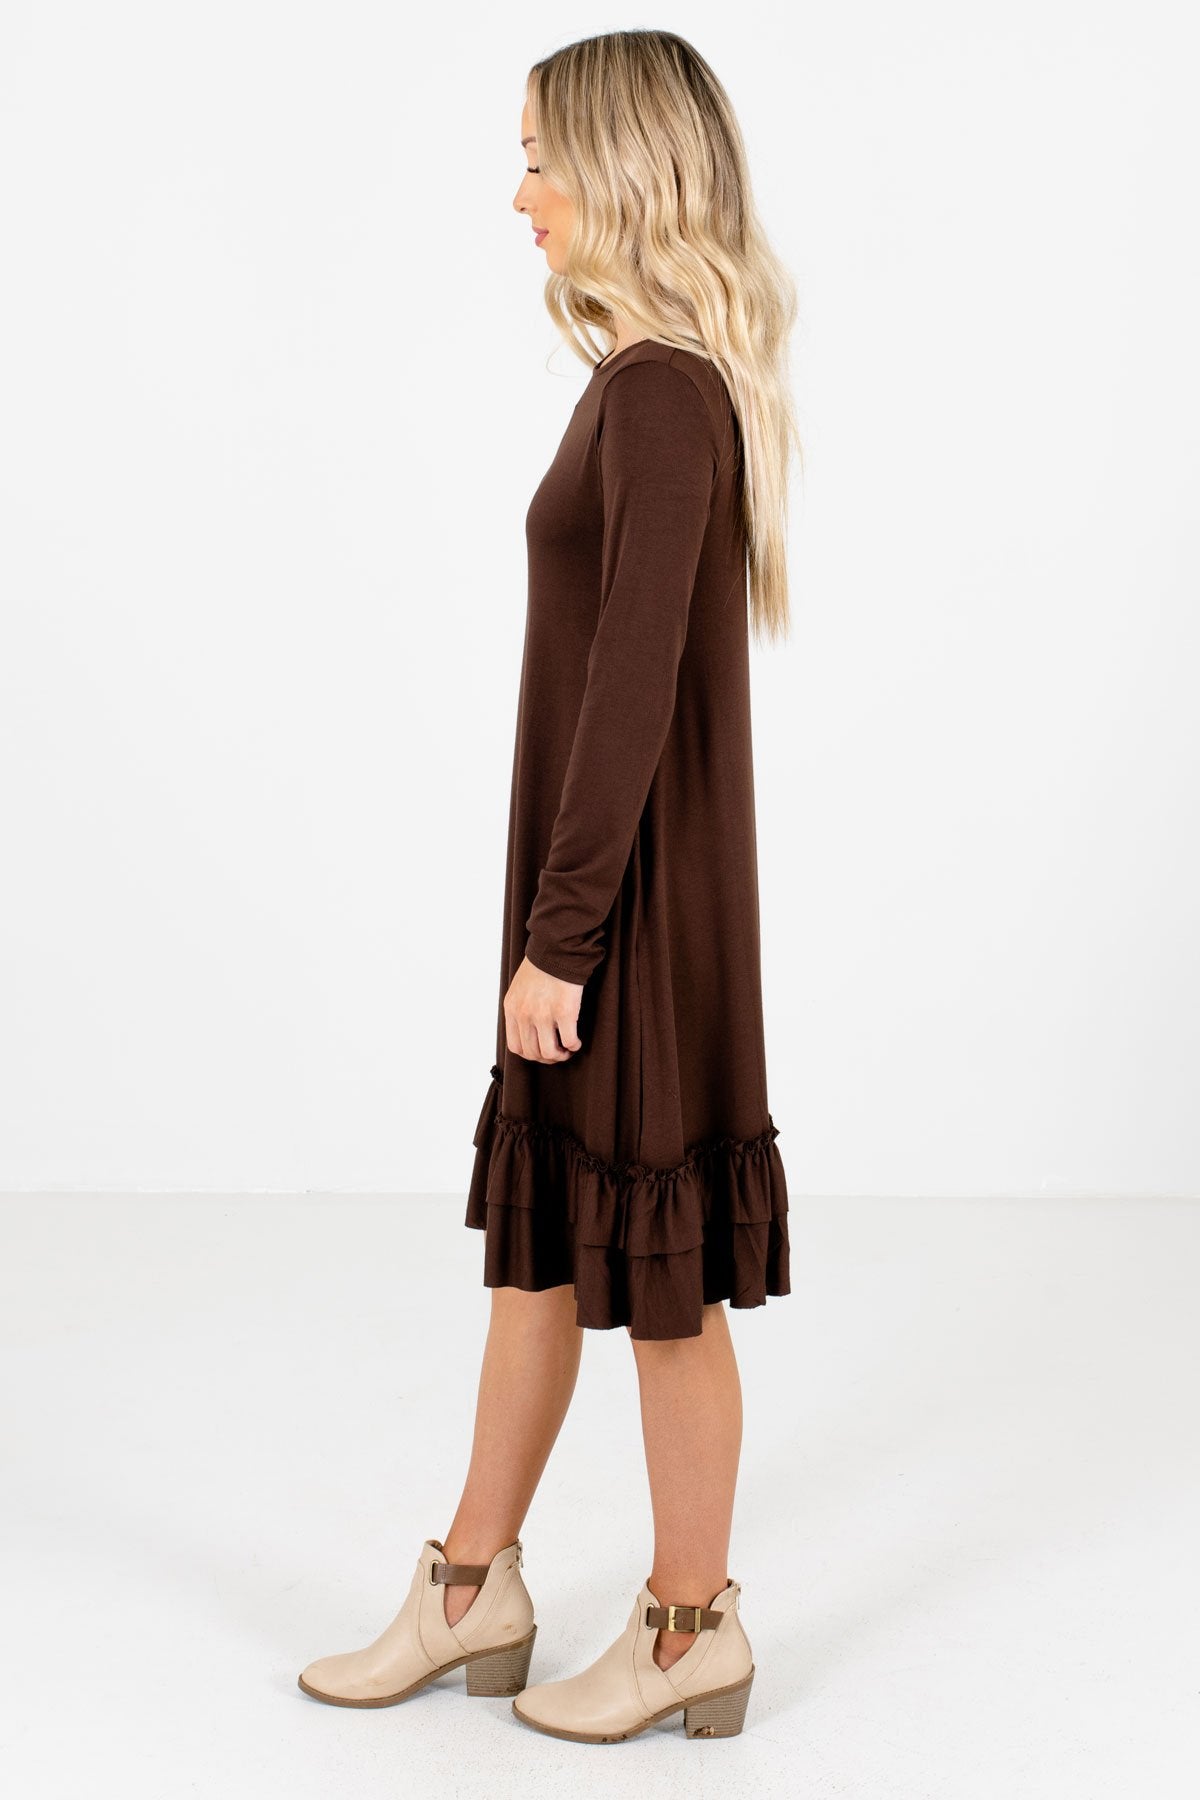 Brown Round Neckline Boutique Knee-Length Dresses for Women